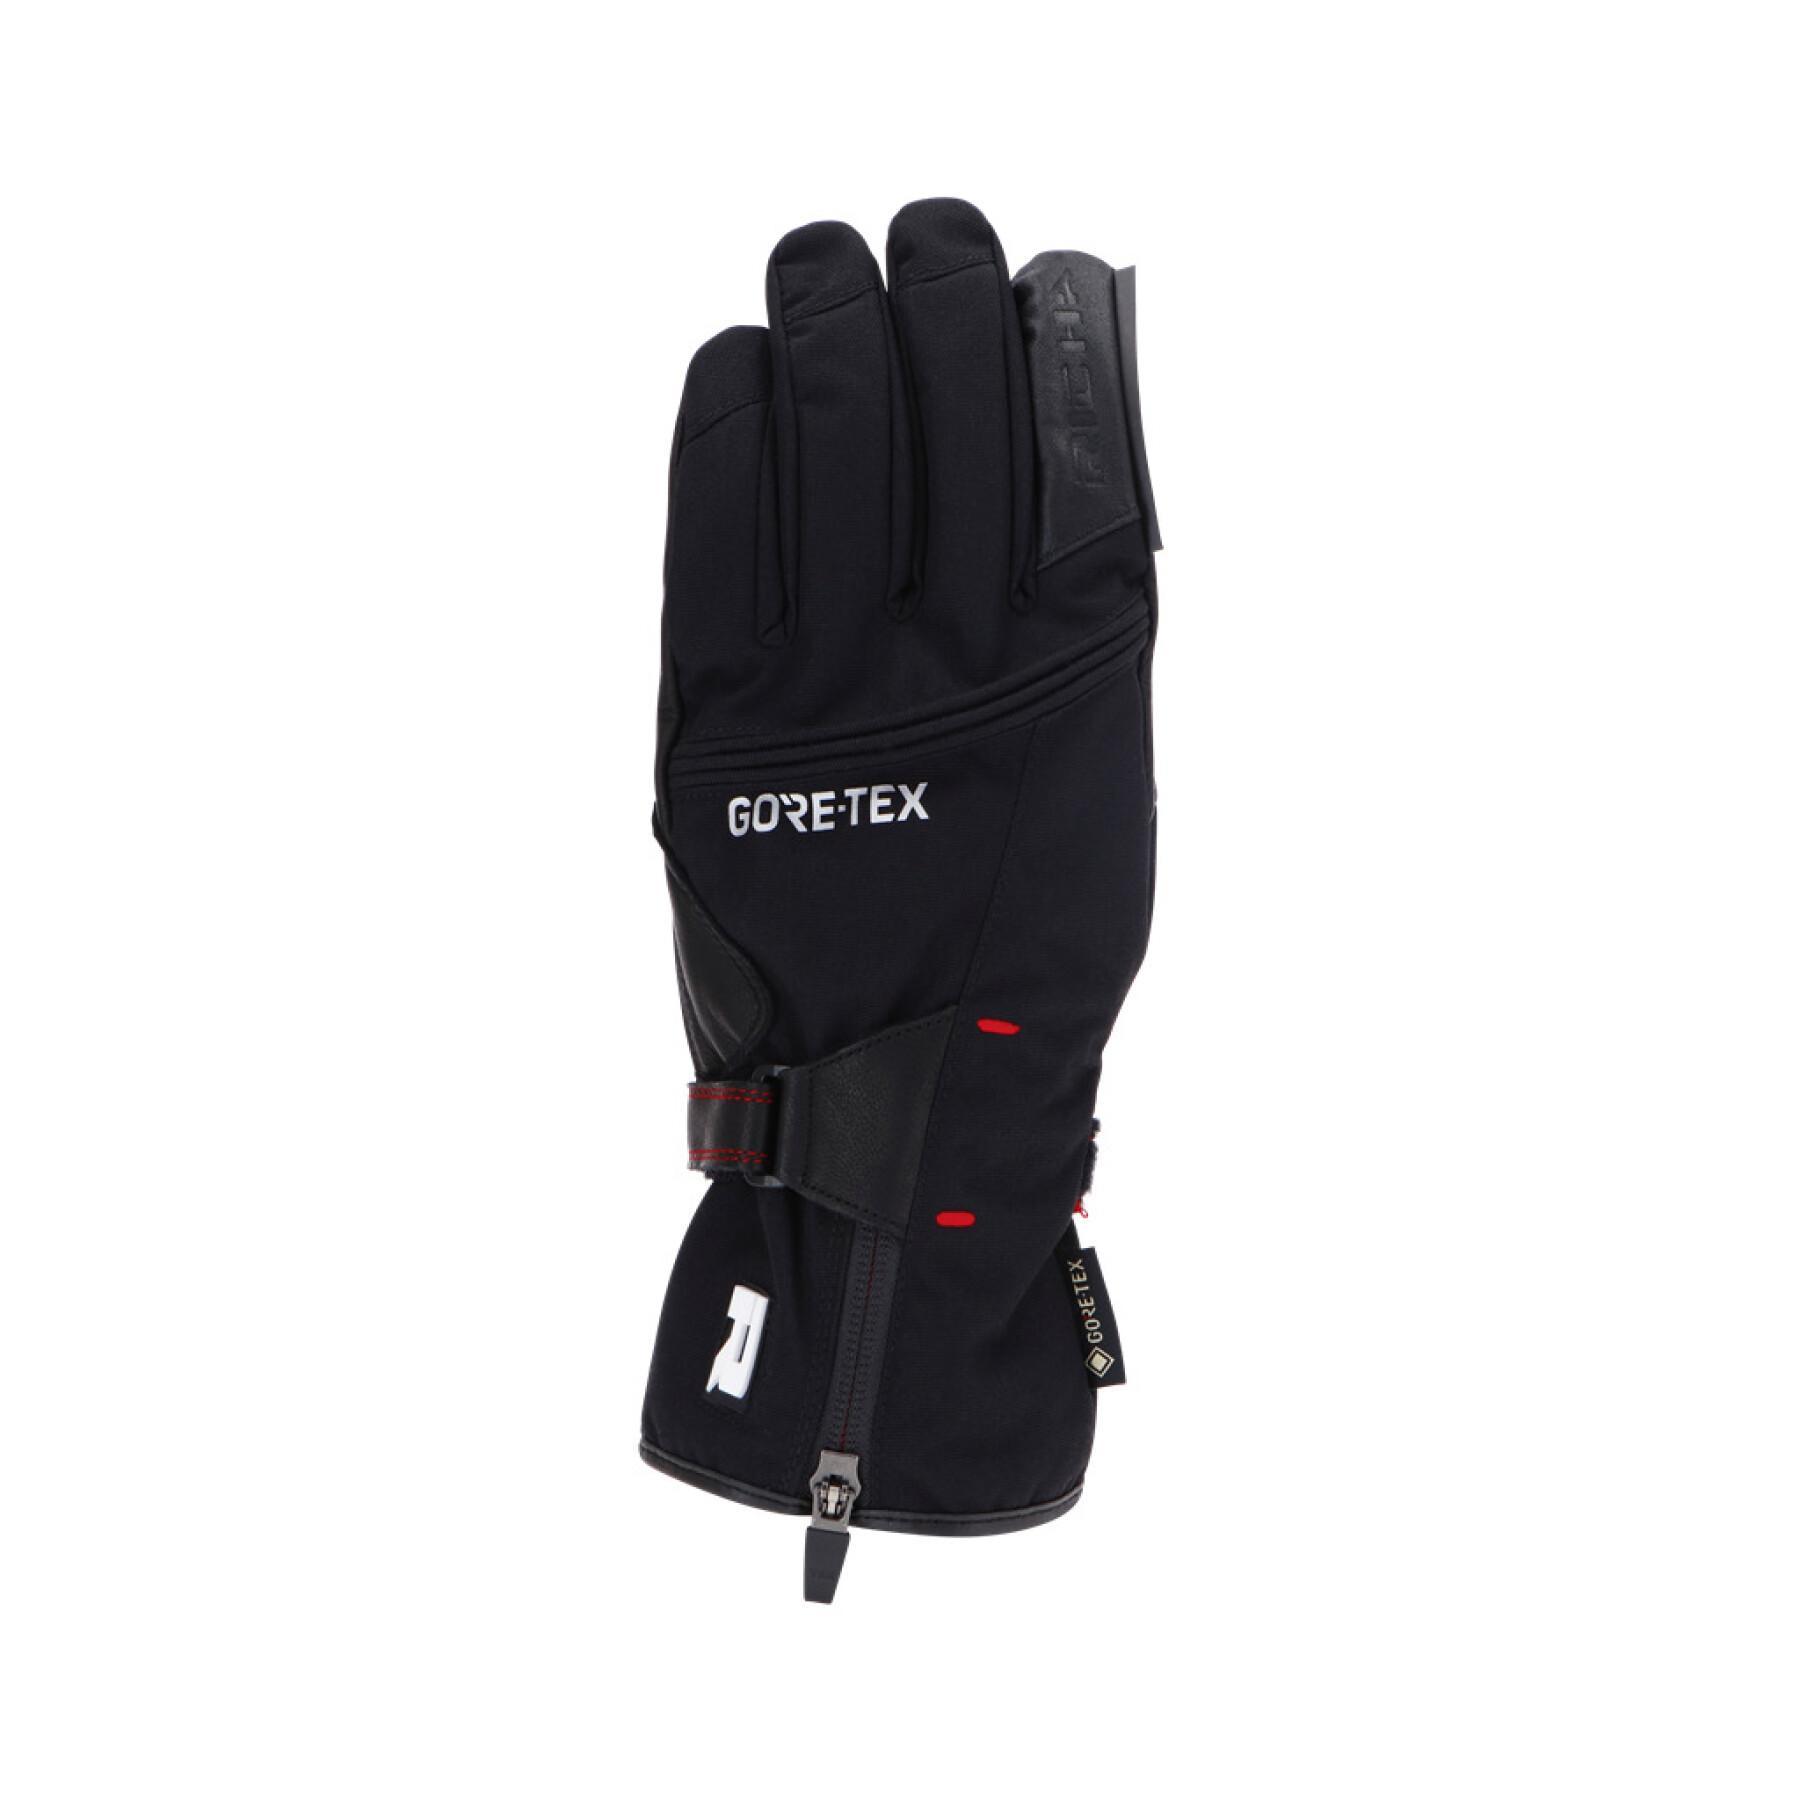 Richa Buster Gore-Tex mid-season motorcycle gloves